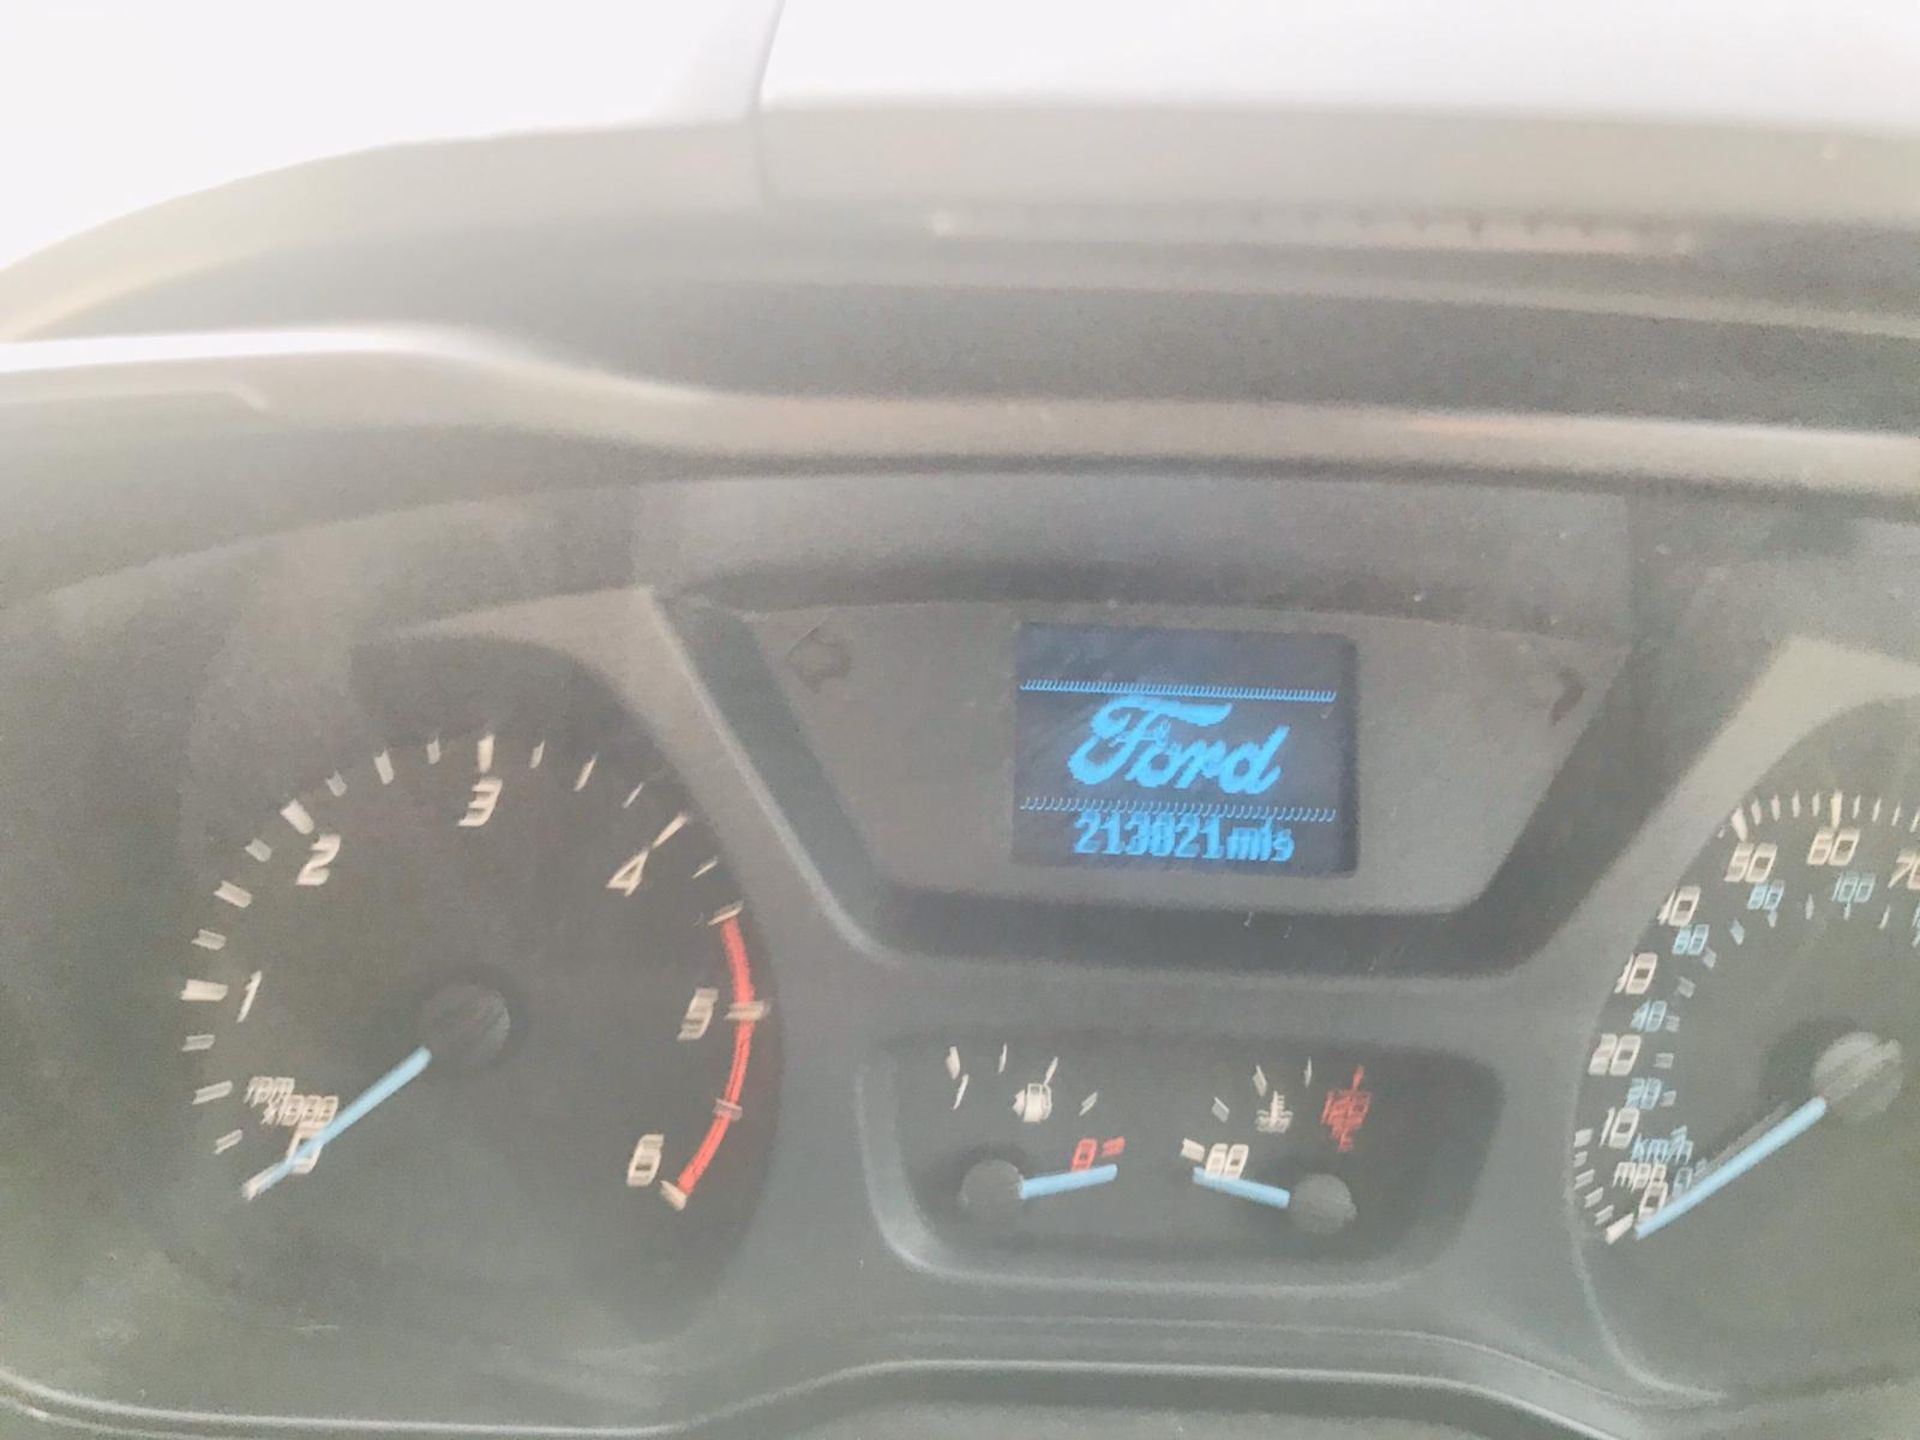 Ford Transit Custom 2.2 TDCI **HIGH ROOF** 2015 15 Reg - SAVE 20% NO VAT - Image 17 of 17